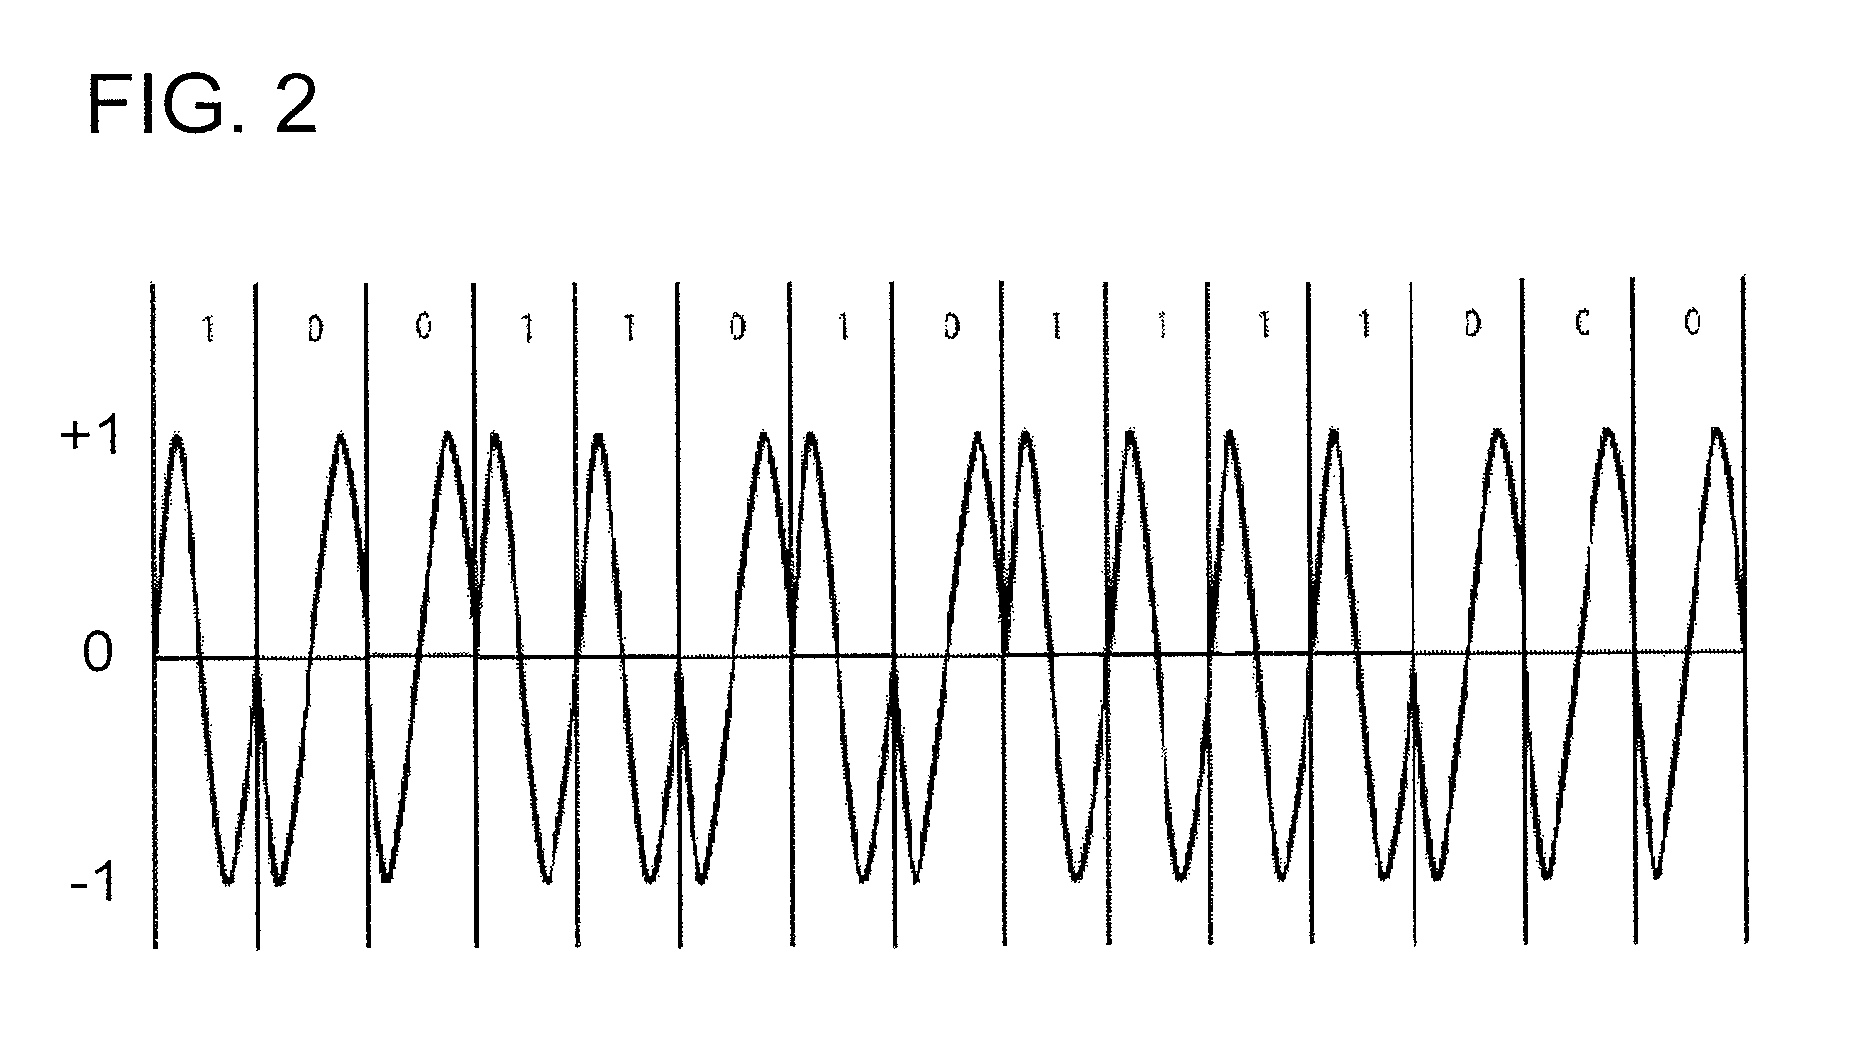 Ultrasonic wave propagation time measuring system